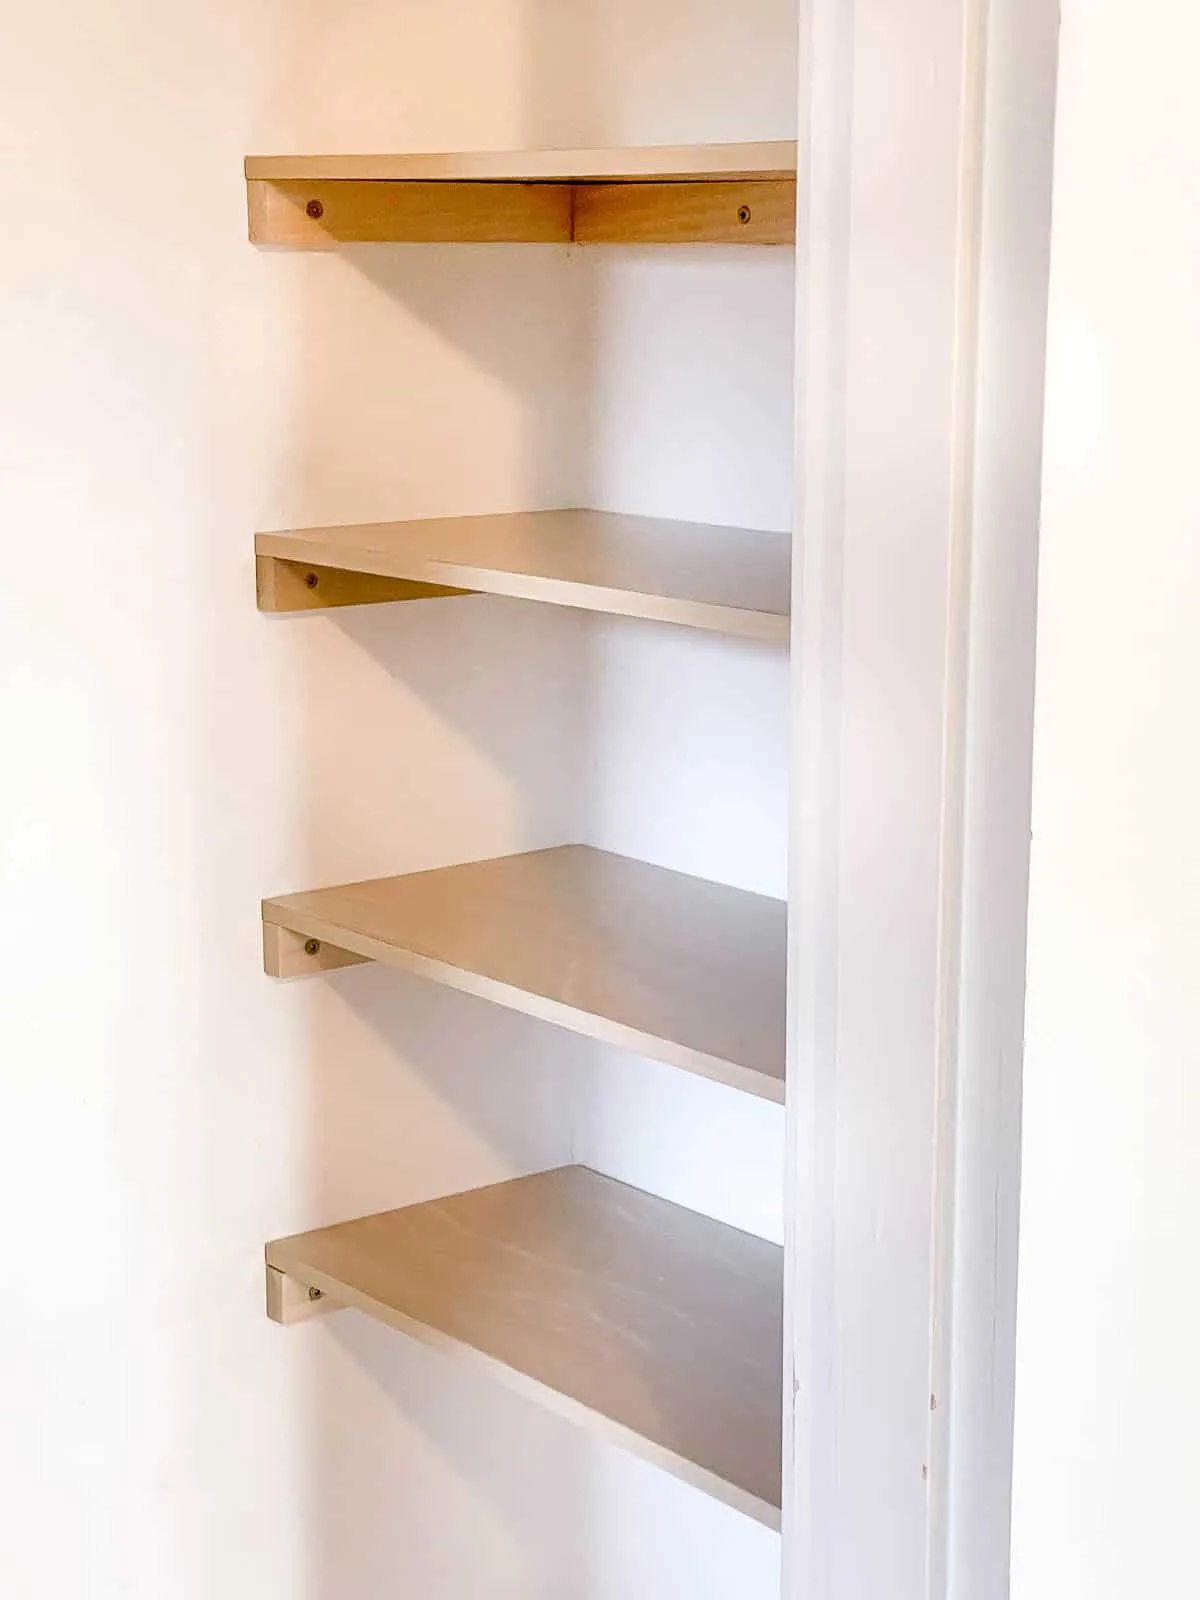 DIY closet shelves installed in side of closet